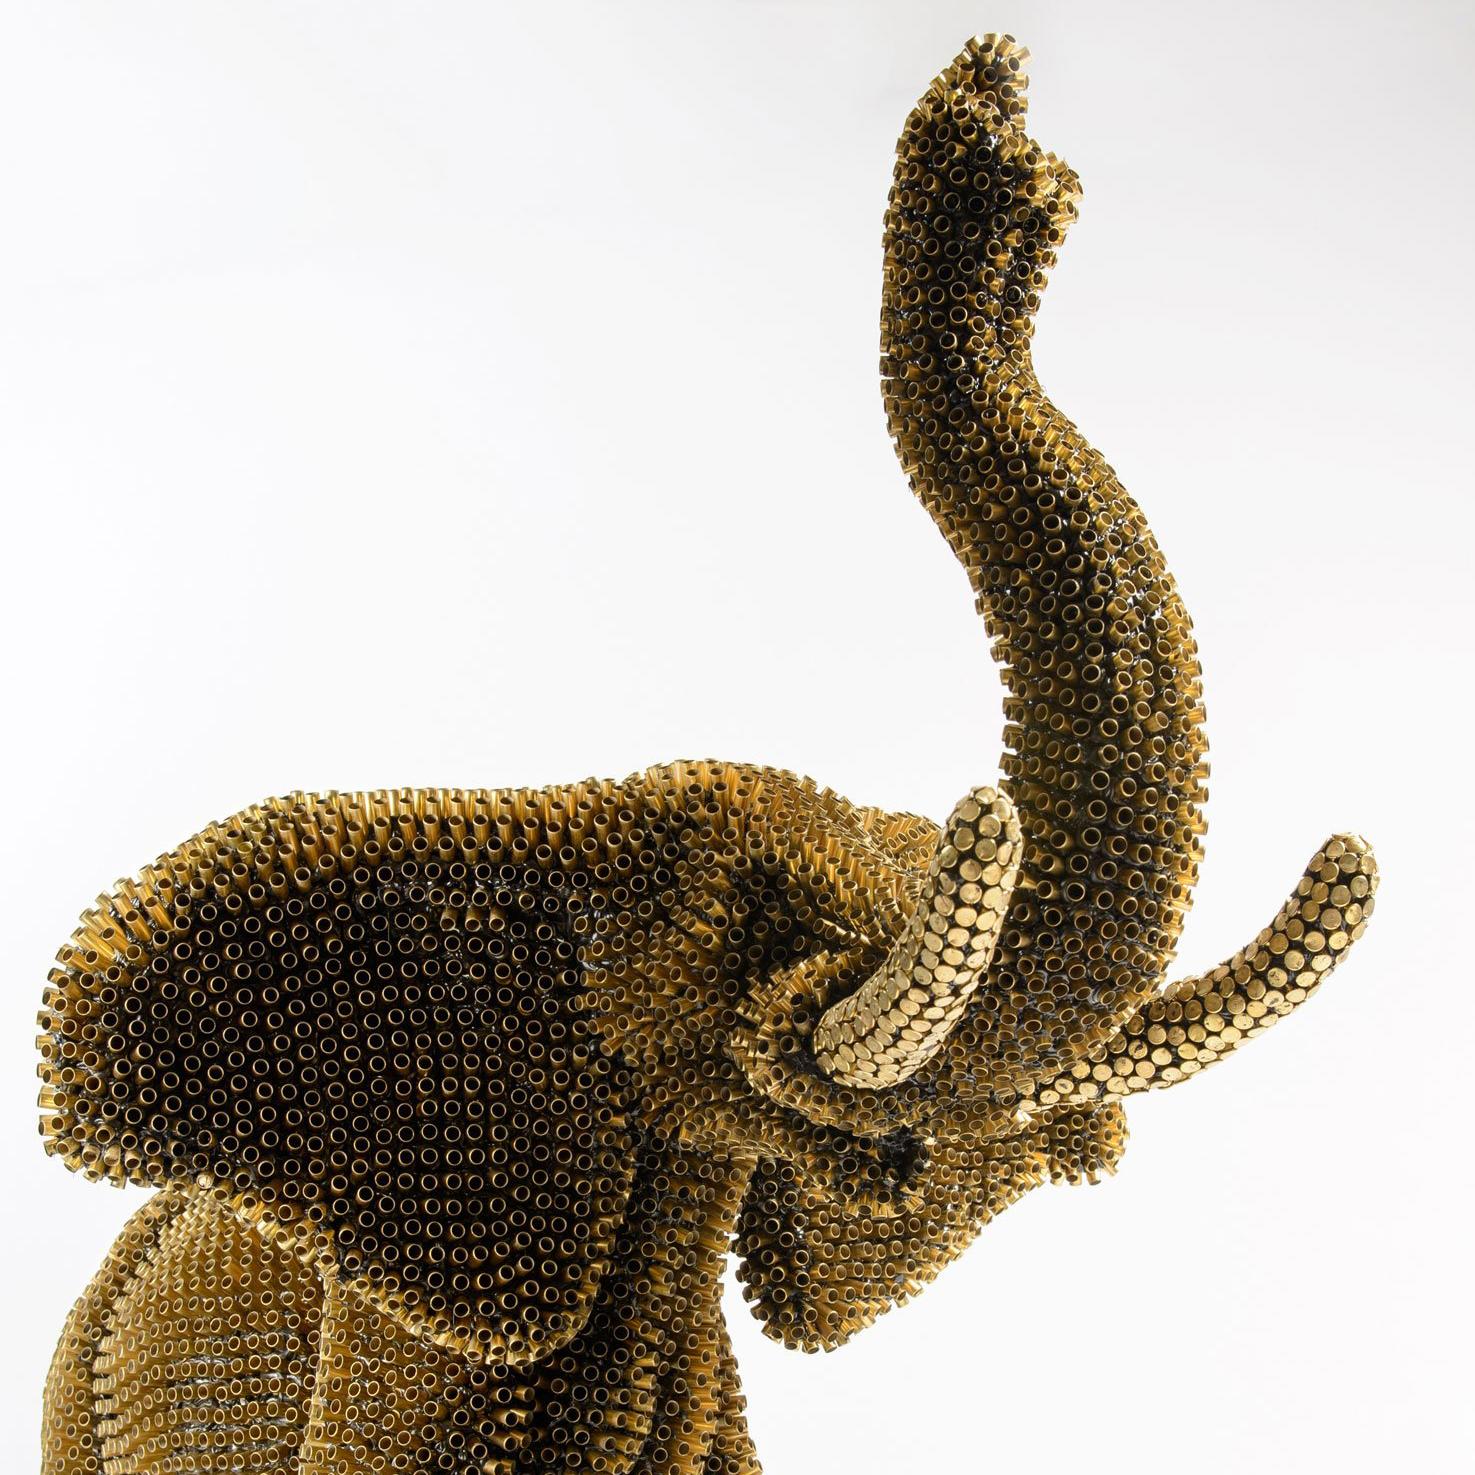 Elephant - Contemporary Sculpture by Sebiha Demir